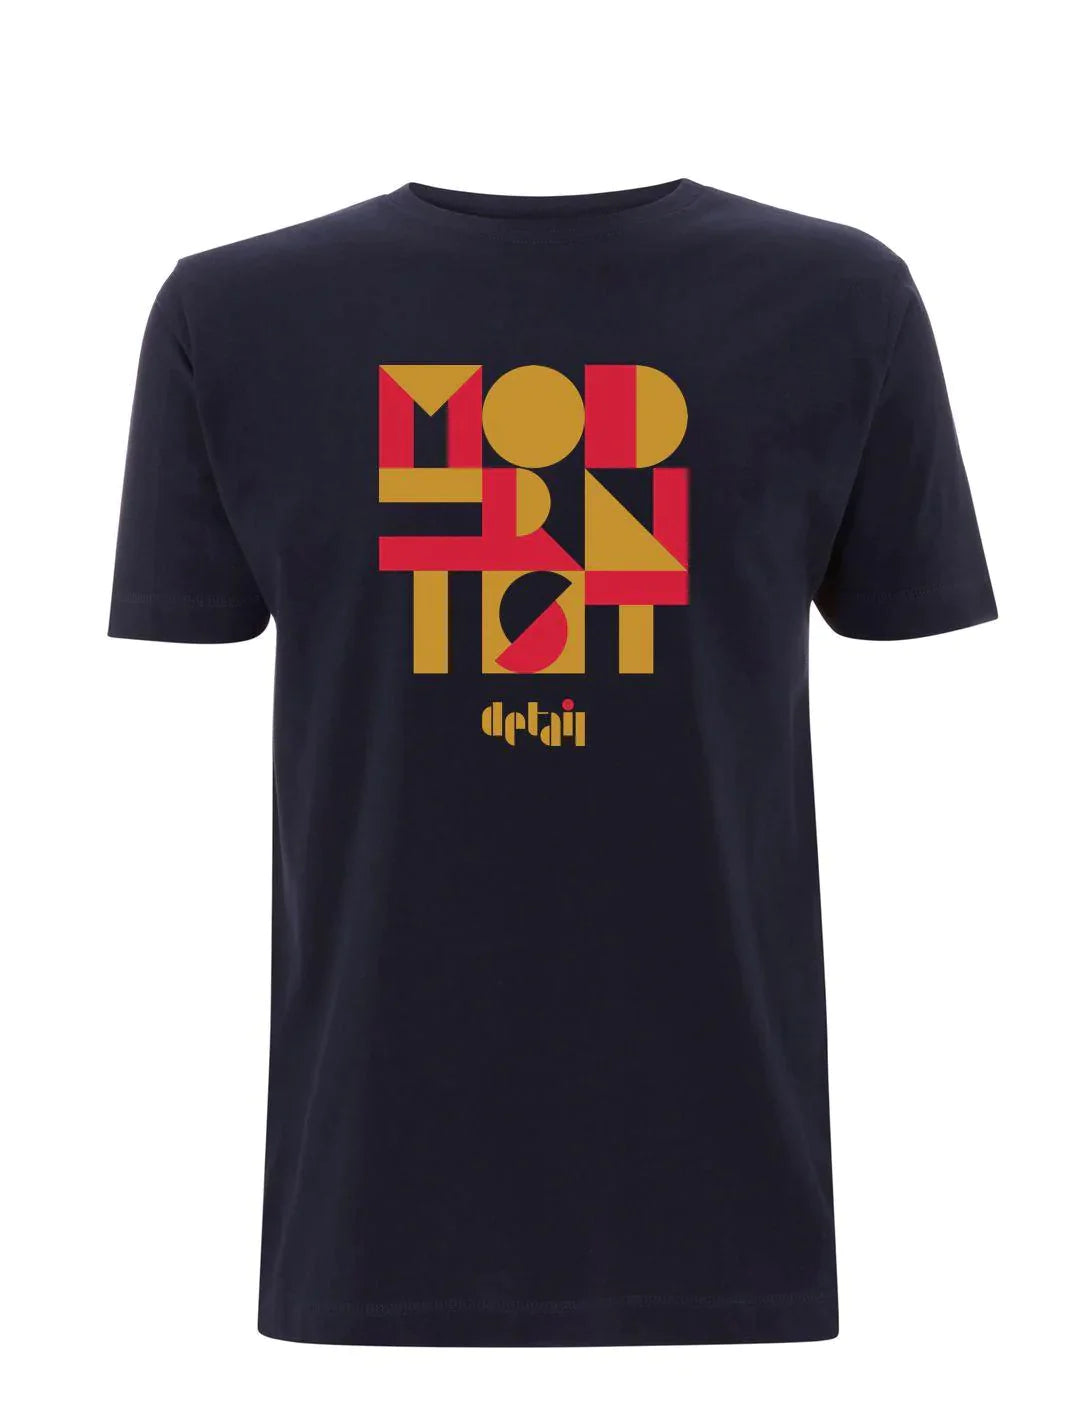 MODERNIST: T-Shirt Official Merchandise for Detail magazine - SOUND IS COLOUR